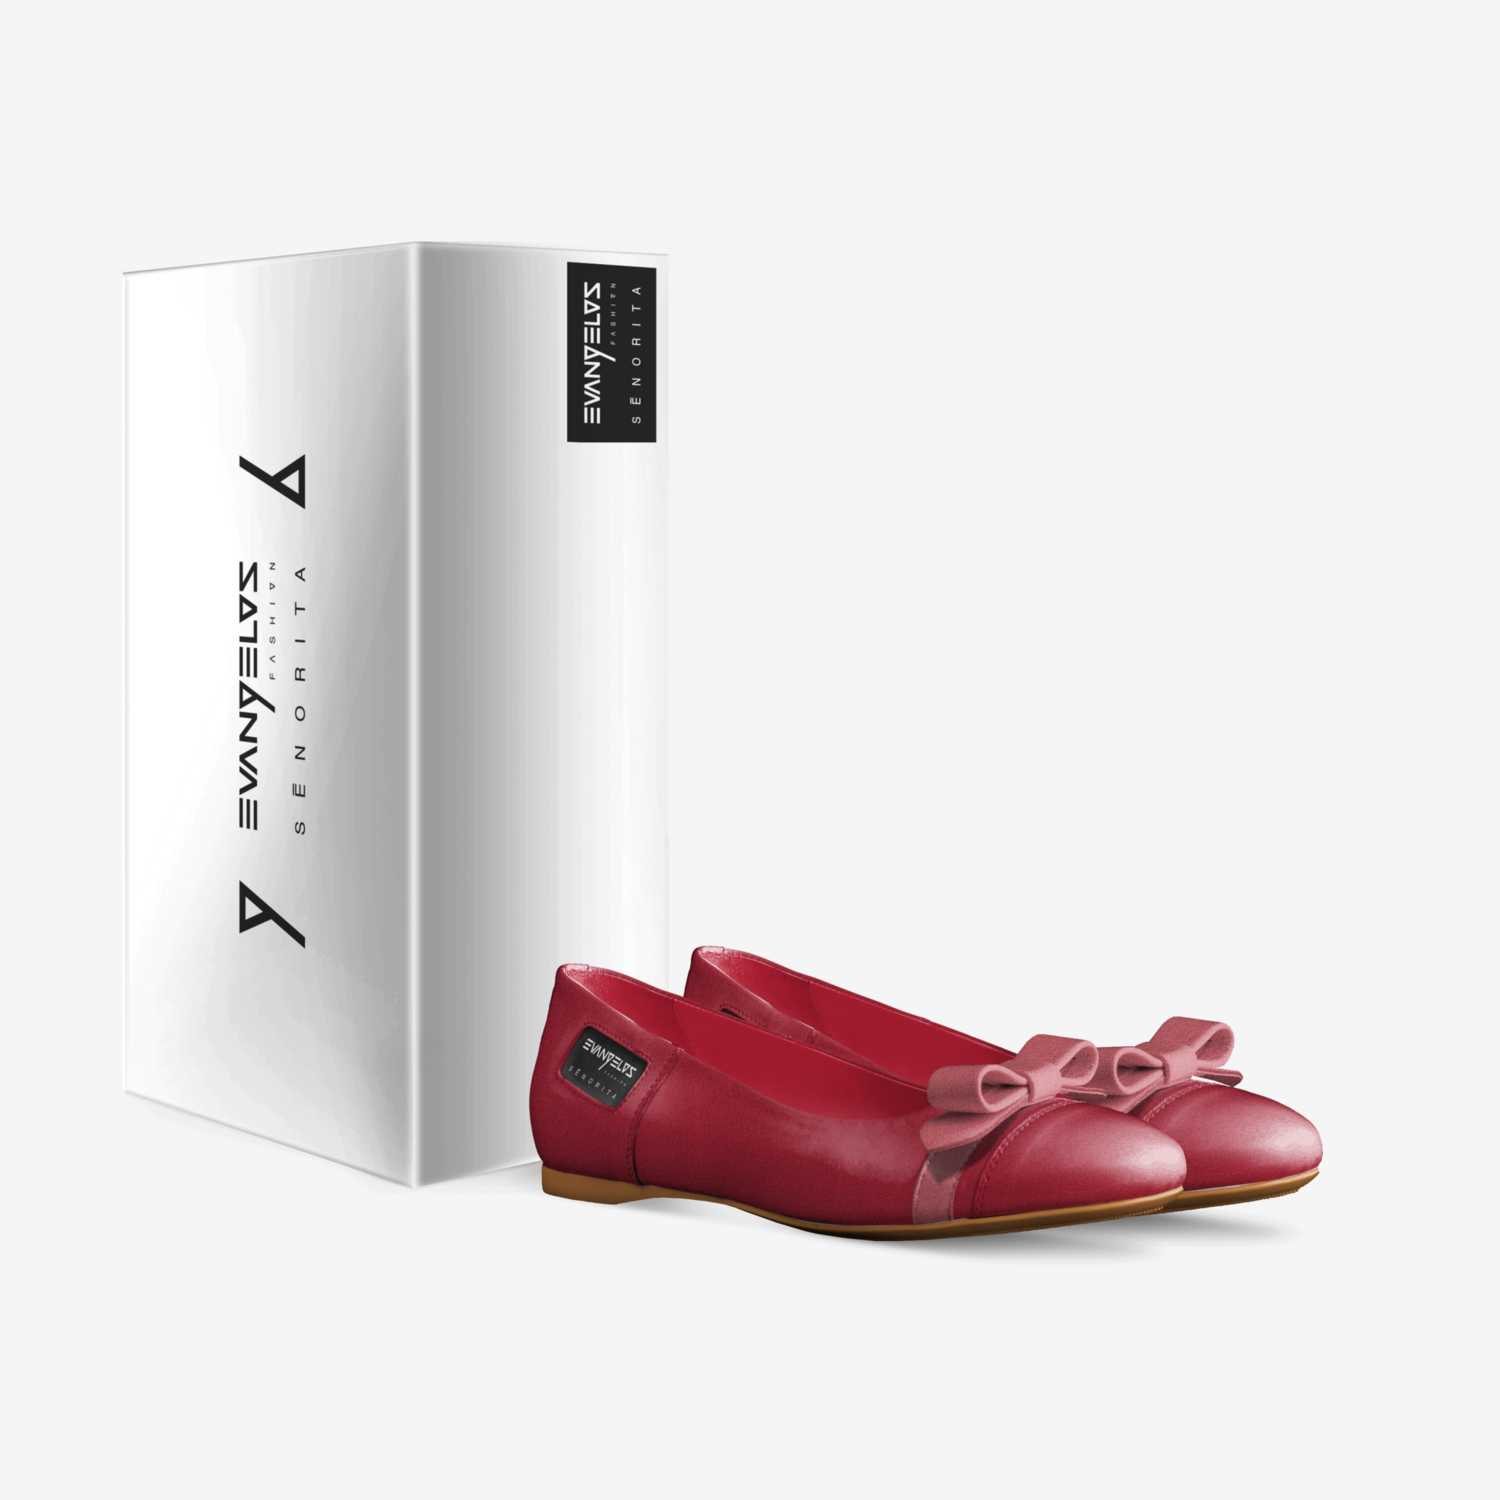 SENORITA custom made in Italy shoes by Evangelos Fashion | Box view